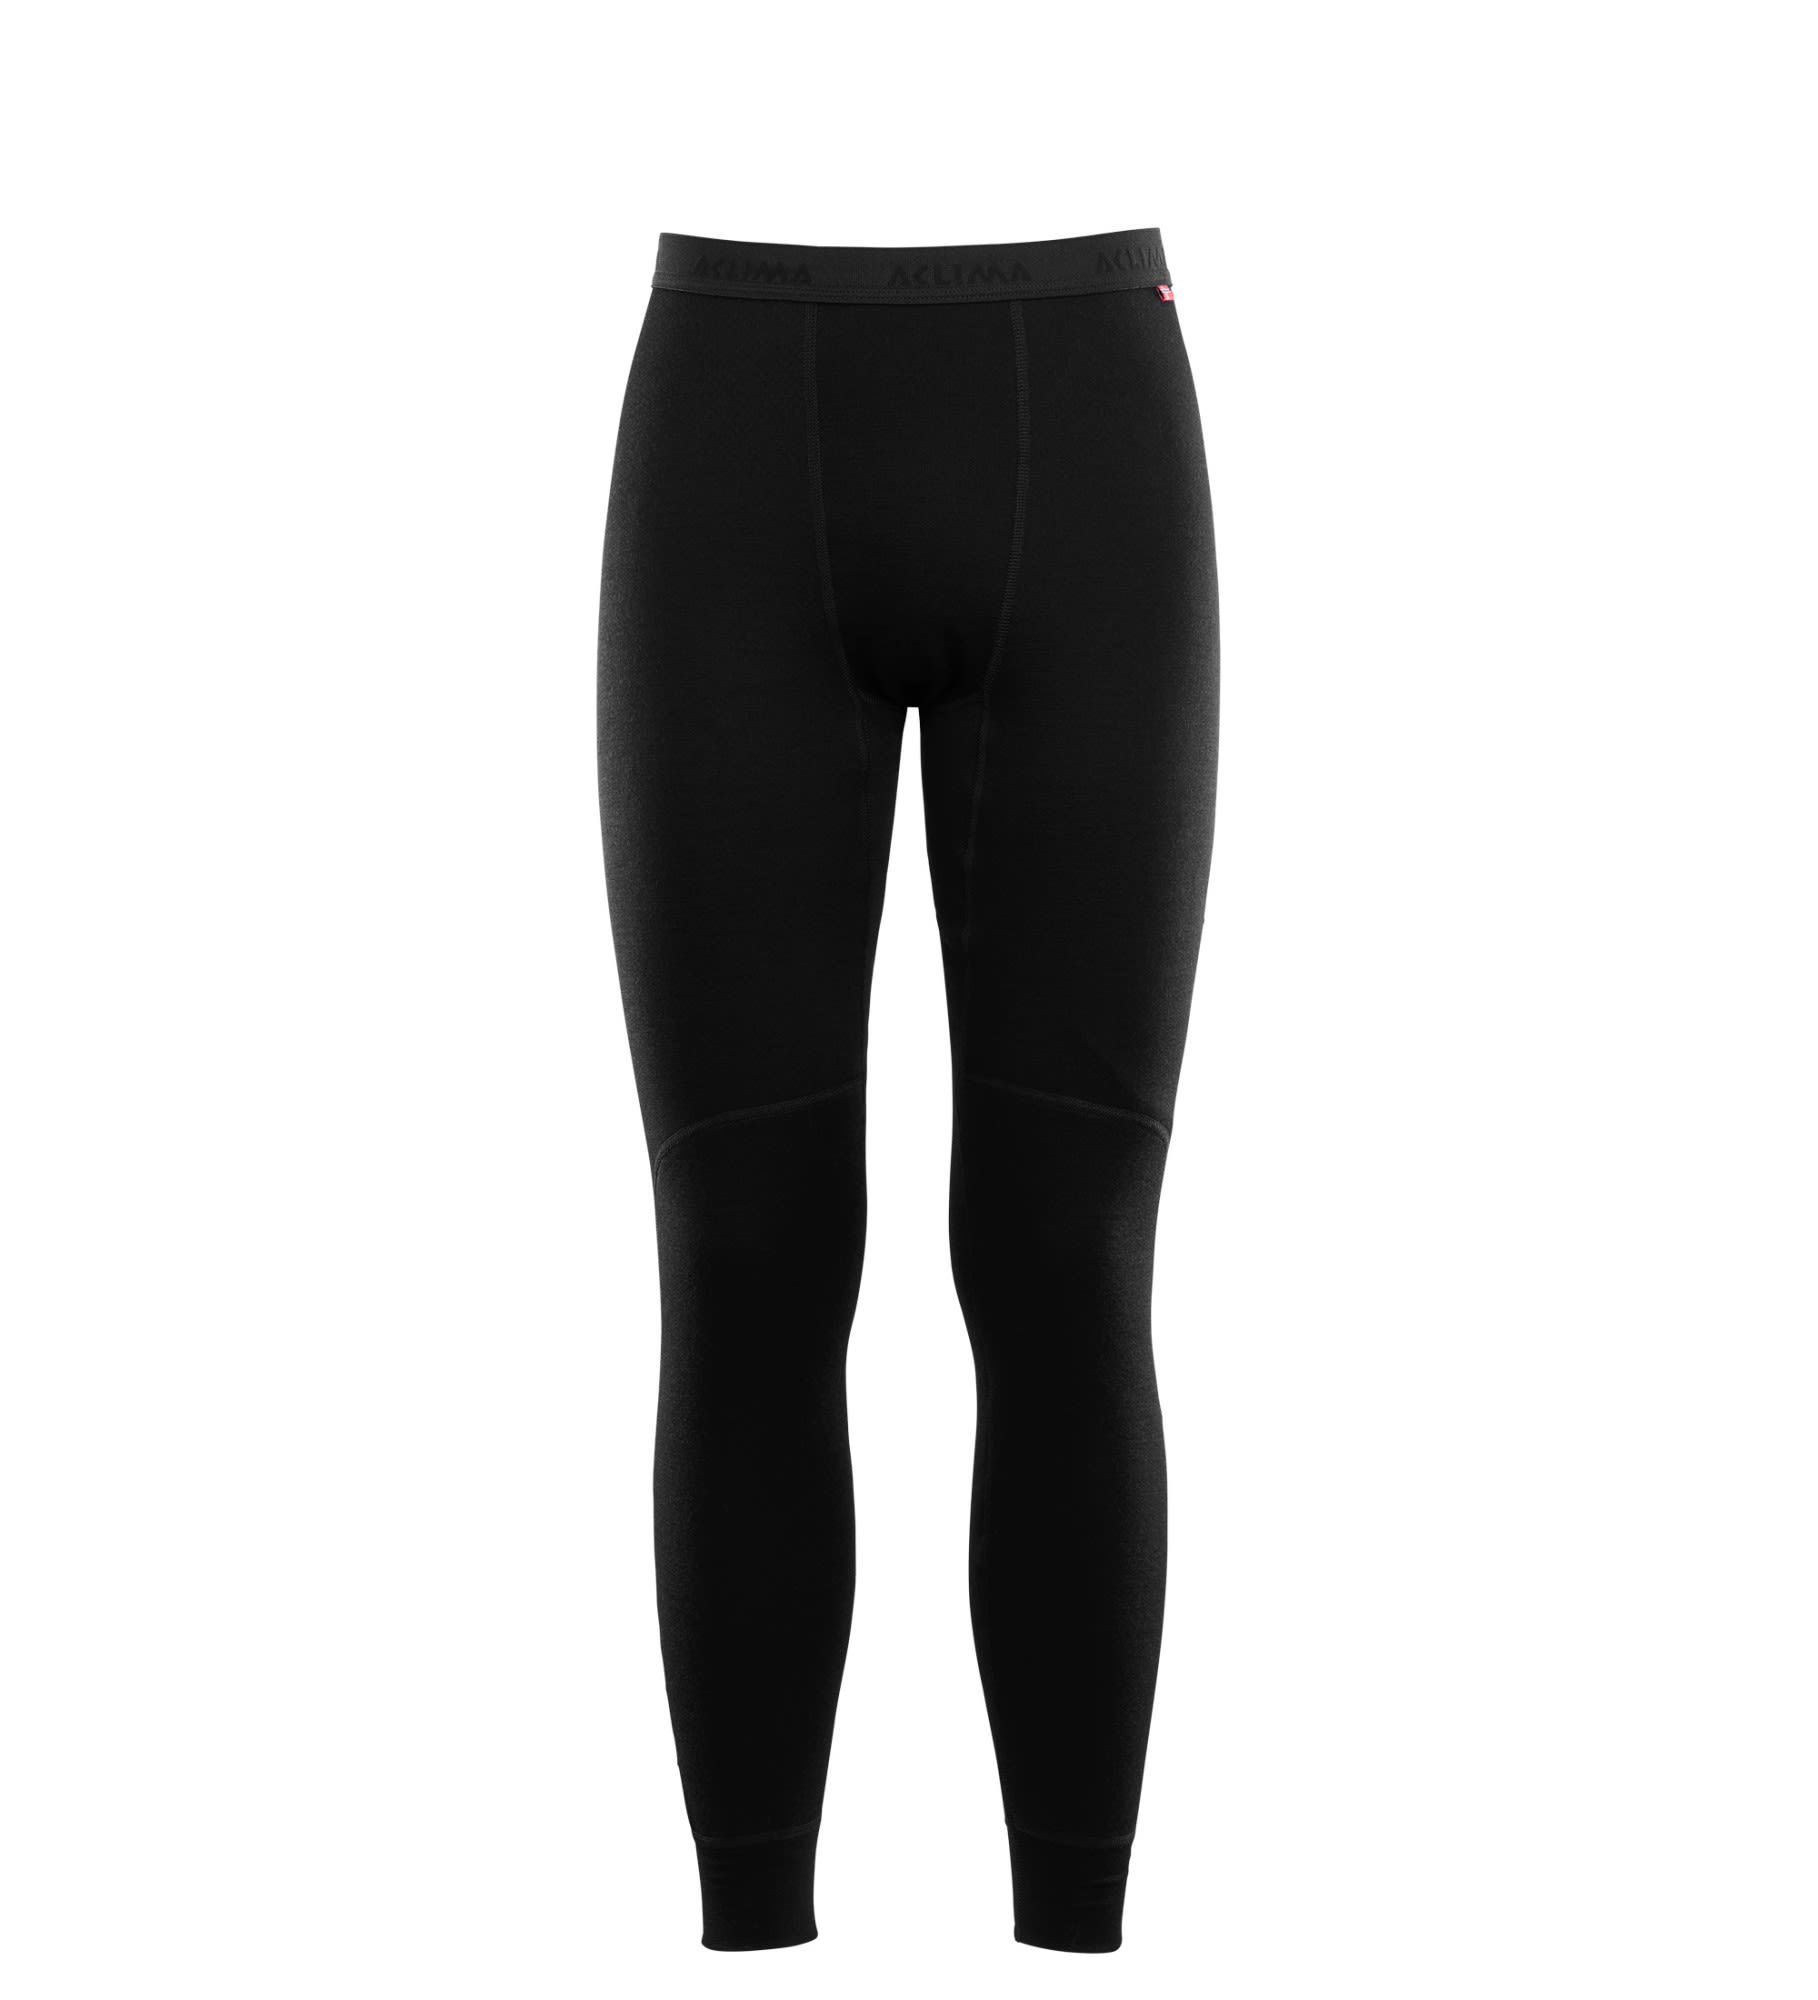 Aclima Doublewool Long Pants Schwarz- Male Merino Leggings und Tights- Grsse XS - Farbe Jet Black unter Aclima